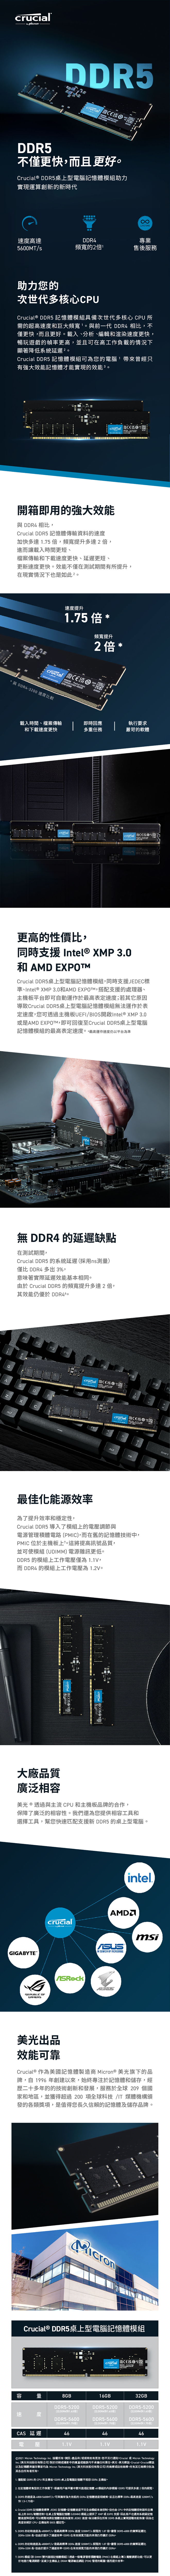 AN ALTtװF56MT/DDR5ȧ֦ӥBn P DDR30 t׸rucial? DDR5WqOUO{BзssɥNUOz@Nh֤PUJɶɮ׶ǿUtק֩wtCrucial? DDR5 OҲըƦ@Nh֤ CPU һݶWtשMj' Pe@N DDR4 ۤ񤣶ȧ֦ӥBnJRBsMVtקֺZCVv󰪨åBibu@tpUۭCtΩCrucial DDR5 OҲեizqaӴgujjįO~{į 3 }cYΪjjįP DDR4 ۤCrucial DDR5 Oǿƪtץ[֦hF 75 ɦhF2iJɶuBɮ׶ǿMUtק֡BuBstק֡CįणȦbմҴɦb{걡pU]OpC4FI,zF2eiaGIGABYTEjt~sxREPUBLIC OFGAMERS󰪪ʻ,Pɤ䴩 Intel? XMP 30 EXPO.iqtCASq  C  Crucial DDR5WqOҲ,Pɤ䴩JEDECl?EXDPOM,ft䴩BzBBInteOXMP 3.0MAMxYi ۰ʹB@DɭPCruc4. Crucial DDR5 O5. DDR5 ltDDR43200 ,~įia6. DDR5 ltDDR4-3200 άOAMEXPDOҲժ̰wtסC̰B@tפHx7. DDR5 ҲէY DIL DDR4 Ibմ,CrucialDDR5 tΩ ĥnsqȤ DDR4 hX 3%,   򥻬ۦPCCrucial DDR5  W e  ɦhF2, ऴu DDR4CNOM,F3DDR5zLDOU4800MMOЦnai qո`,e4800ót״1.75    - DlDR5WqOҲյLkB@XMP 3.0ntel?5WqCPU MDO~zLPDycrucial DDR4We2MTYi^ _F4  Technology Inc. vҦInc. (ުѥqL vHΰO Px|sU۩Ҧ̩ҦCMT/оЪOW(JEDEC O COBIOS/骺 CbWqOt׭C , iHPaNO鰪ר̿CPUBDOM BIOS íwʡC̨ΤƯ෽Ĳvw,FɮĲv MíCrucial DDR5 ɤJFҲդWqո`Pq޲z q (PMIC,  b ªO޳N,PMIC   D OWo N  T ~åi (UDIMM)չq  TC CDDR5 ҲդWu@ q  1.1V, DDR4    W u@,q1.2VC/s,O̴֥DaMo U ,O ȱoz[H ઺(COcrucial   Origin  s,O̾DDR5-5200(DDR41.63)t8GBDDR5-5600(DDR41.75)?PX@,O٤Fsxۮe ʡCڭ ٬z  euMܤu, zֳt  s DDR5  WqCǤ461.1VOWYɦ^hȦ̰ܳEFI/BIOS}IDDialcrucial200 y /IT Ca,oWLCCrucial? @Osy Micron? XU~xs,gP, 1996 ~ЫإH,lױM`O MGQh~ ޳N  s MҲ)DRAMWe2 *F5qruc)zL@ӹqeο~Crucial? DDR5WqOҲ1. Ȱt DDR5  CPU MDOCDDR5 WqO餣ۮe DDR4 DOCcrucial DDR4 t 3200MT/sзǺ1 wt;Y䥦]F6crucial  Micron(PDN)IN SEARCH OF INCREDIBLEALT޲znR209 Ӱoi,AȩybWe譱{Mu DDR4Cѩ󴣤ɤFqDĲv,DDR5DDR4 t 3200MT/s WeзǦbW?譱{Mu DDR4,ѩ󴣤ɤFqDĲv,DDR5ODDR5-5200(DDR41.63)DDR5-5600(DDR41.75)4616GB000000z1.1Vcrucial dnDYVnq(crucial 20 CMicron Technology Inc.(ުѥq)ӼЩεUӼСCҦ䥦ӼФOMa2. bOKu@tU,ھڥΤݥOCO x8 Ҳժ,DDR5 iѦhF2WeC3. DDR5 t׬4800-5600MT/s,iP֦jjį઺ DDR4 Ot׬۷B,åBз DDR4 ̰t3200MT/s 1.75CM~AȩMicron TechnologyCB~M/γWp,qCCruciald,00LIFETIMEBFNxscrucial Cintel.)  -msitץѼұ ե ,] CPU  O MDҲUDIMM) W XMP  EXPO 䴩,] ȤbJtίŰOФFc{~ PCJEDEC t׵LkTObҦ DDR5 tΤW{oخį_,]į_32GBDDR5-5200(DDR41.63)DDR5-5600(DDR41.75)461.1VxBCrucialBWe 1.87 C DDR5-4800کCrucialлxC DDR5-4800 ک1.87PMIC) bҲդWɤJqո`\,iH  ĲvCiSHIFT